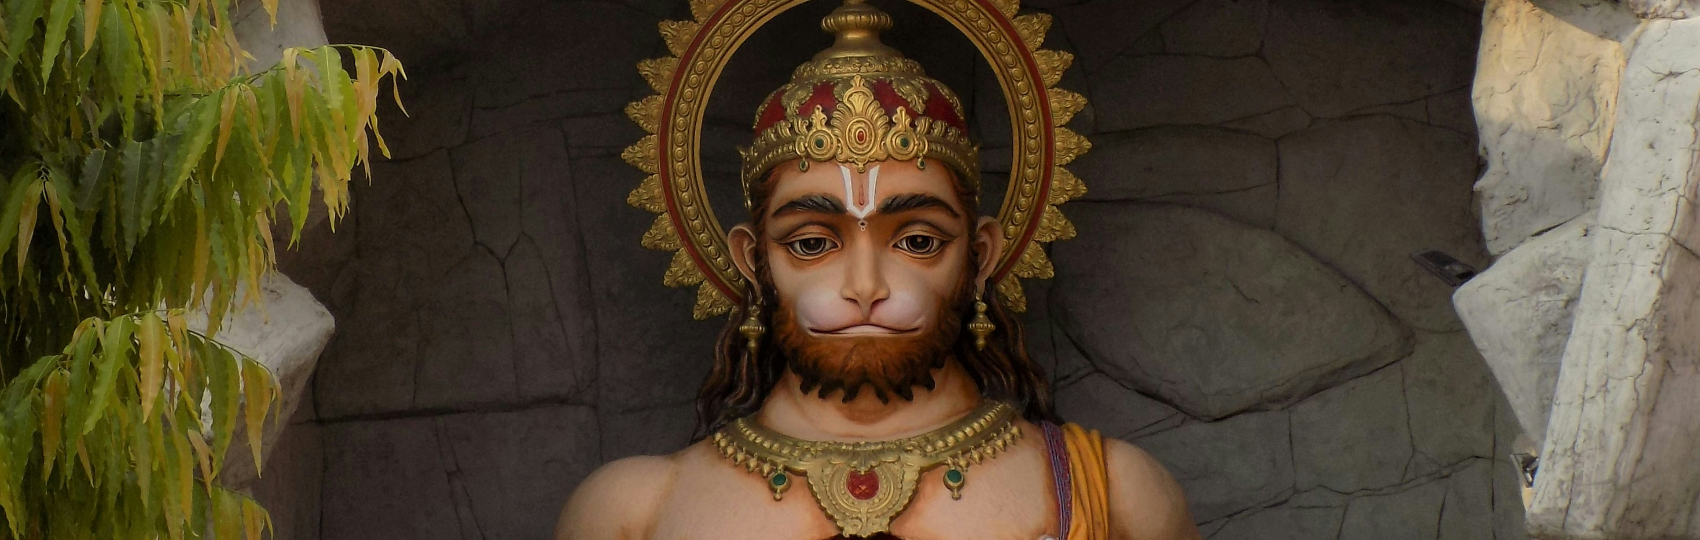 Hanumanasana (Splits): Who Is Hanuman? - Origins Of The Pose Series